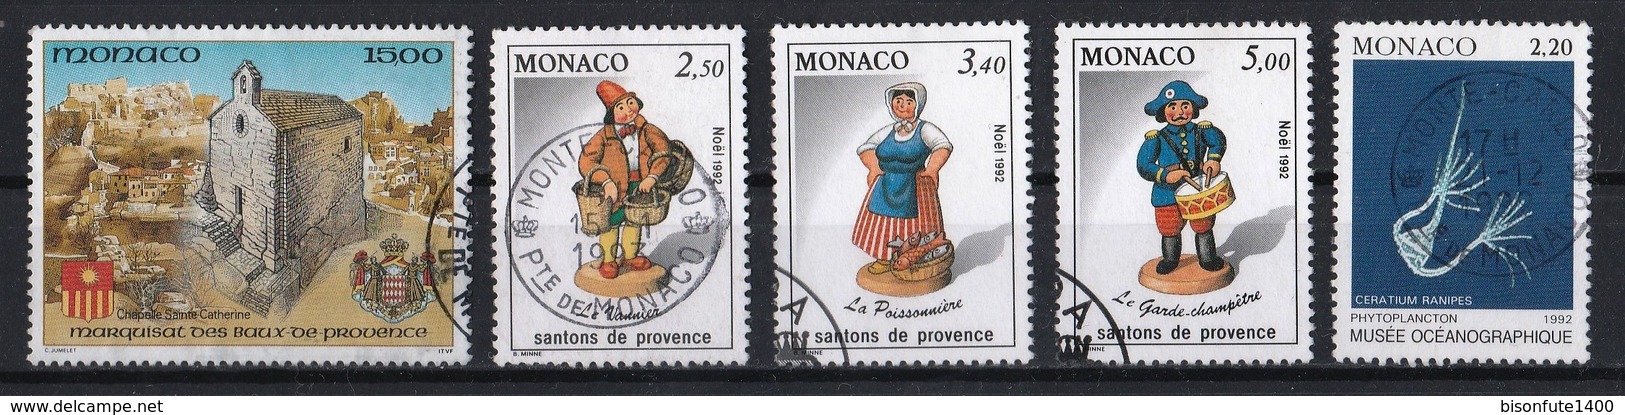 Monaco 1992 : Timbres Yvert & Tellier N° 1811 - 1812 - 1829 - 1833 - 1841 - 1846 - 1847 - 1848 - 1850 Et 1853 Oblitérés. - Usados